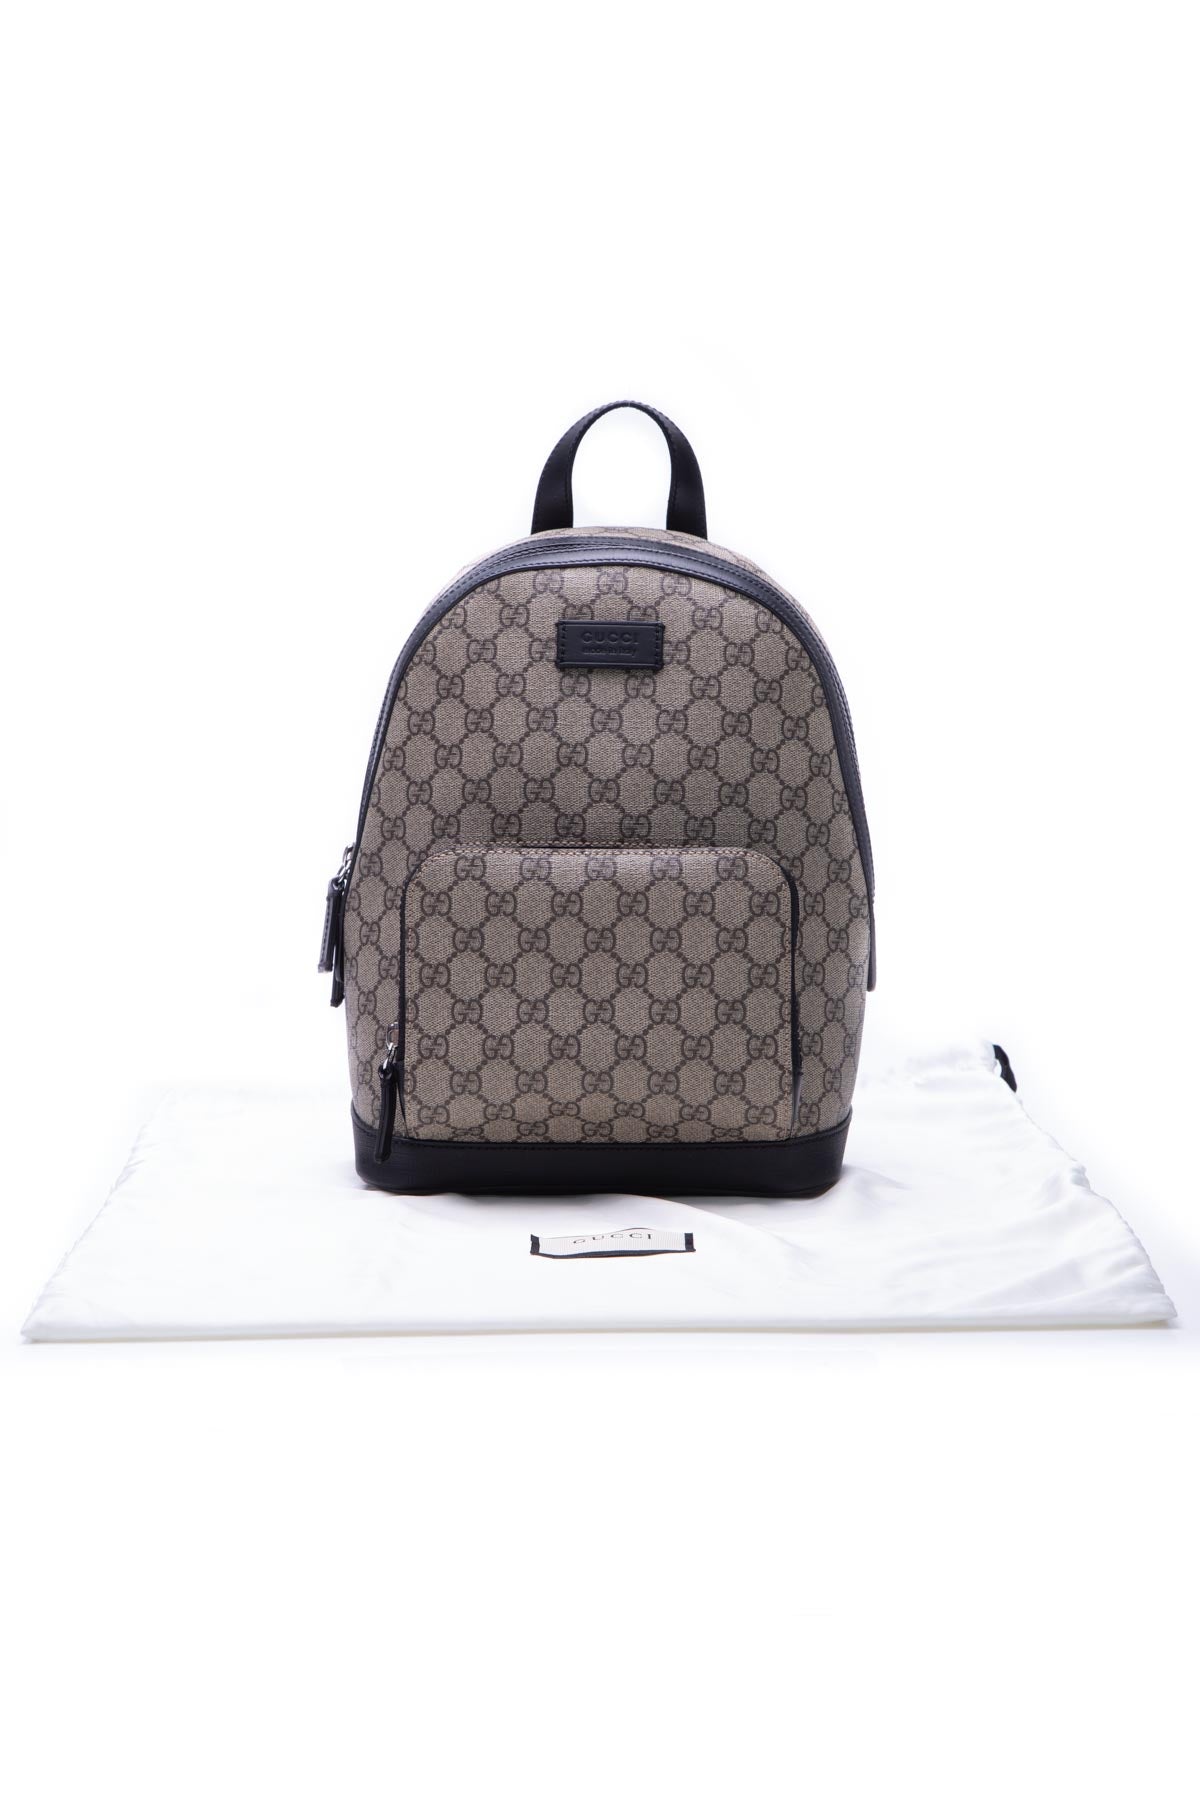 Fashion Replica Tory Burch's Luxury Brand Versac'e's Backpack. Gucc'i's  Bags. - China Replica Bag and Luxury Handbag price